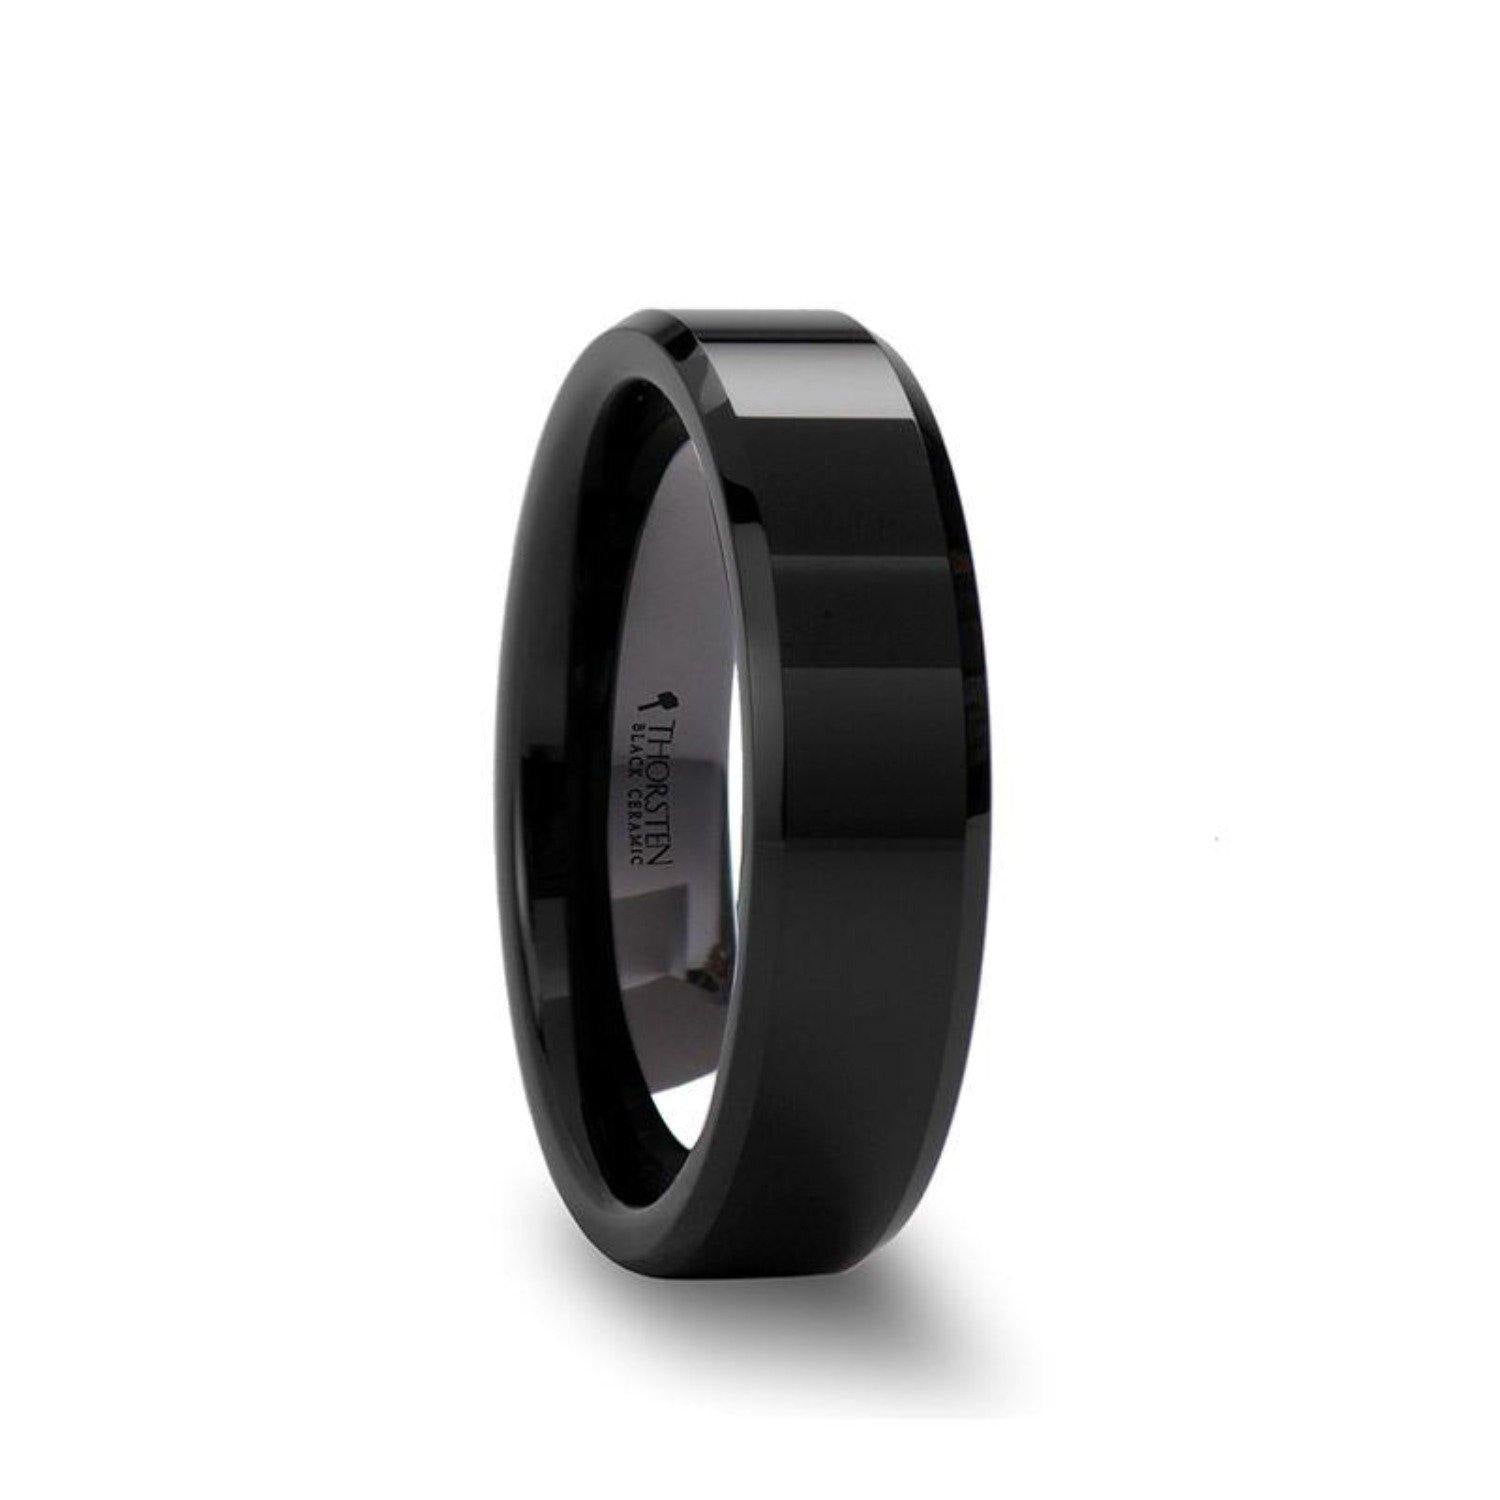 CITAR - Polished Finish Black Ceramic Ring with Beveled Edges - 4mm - 12mm - The Rutile Ltd